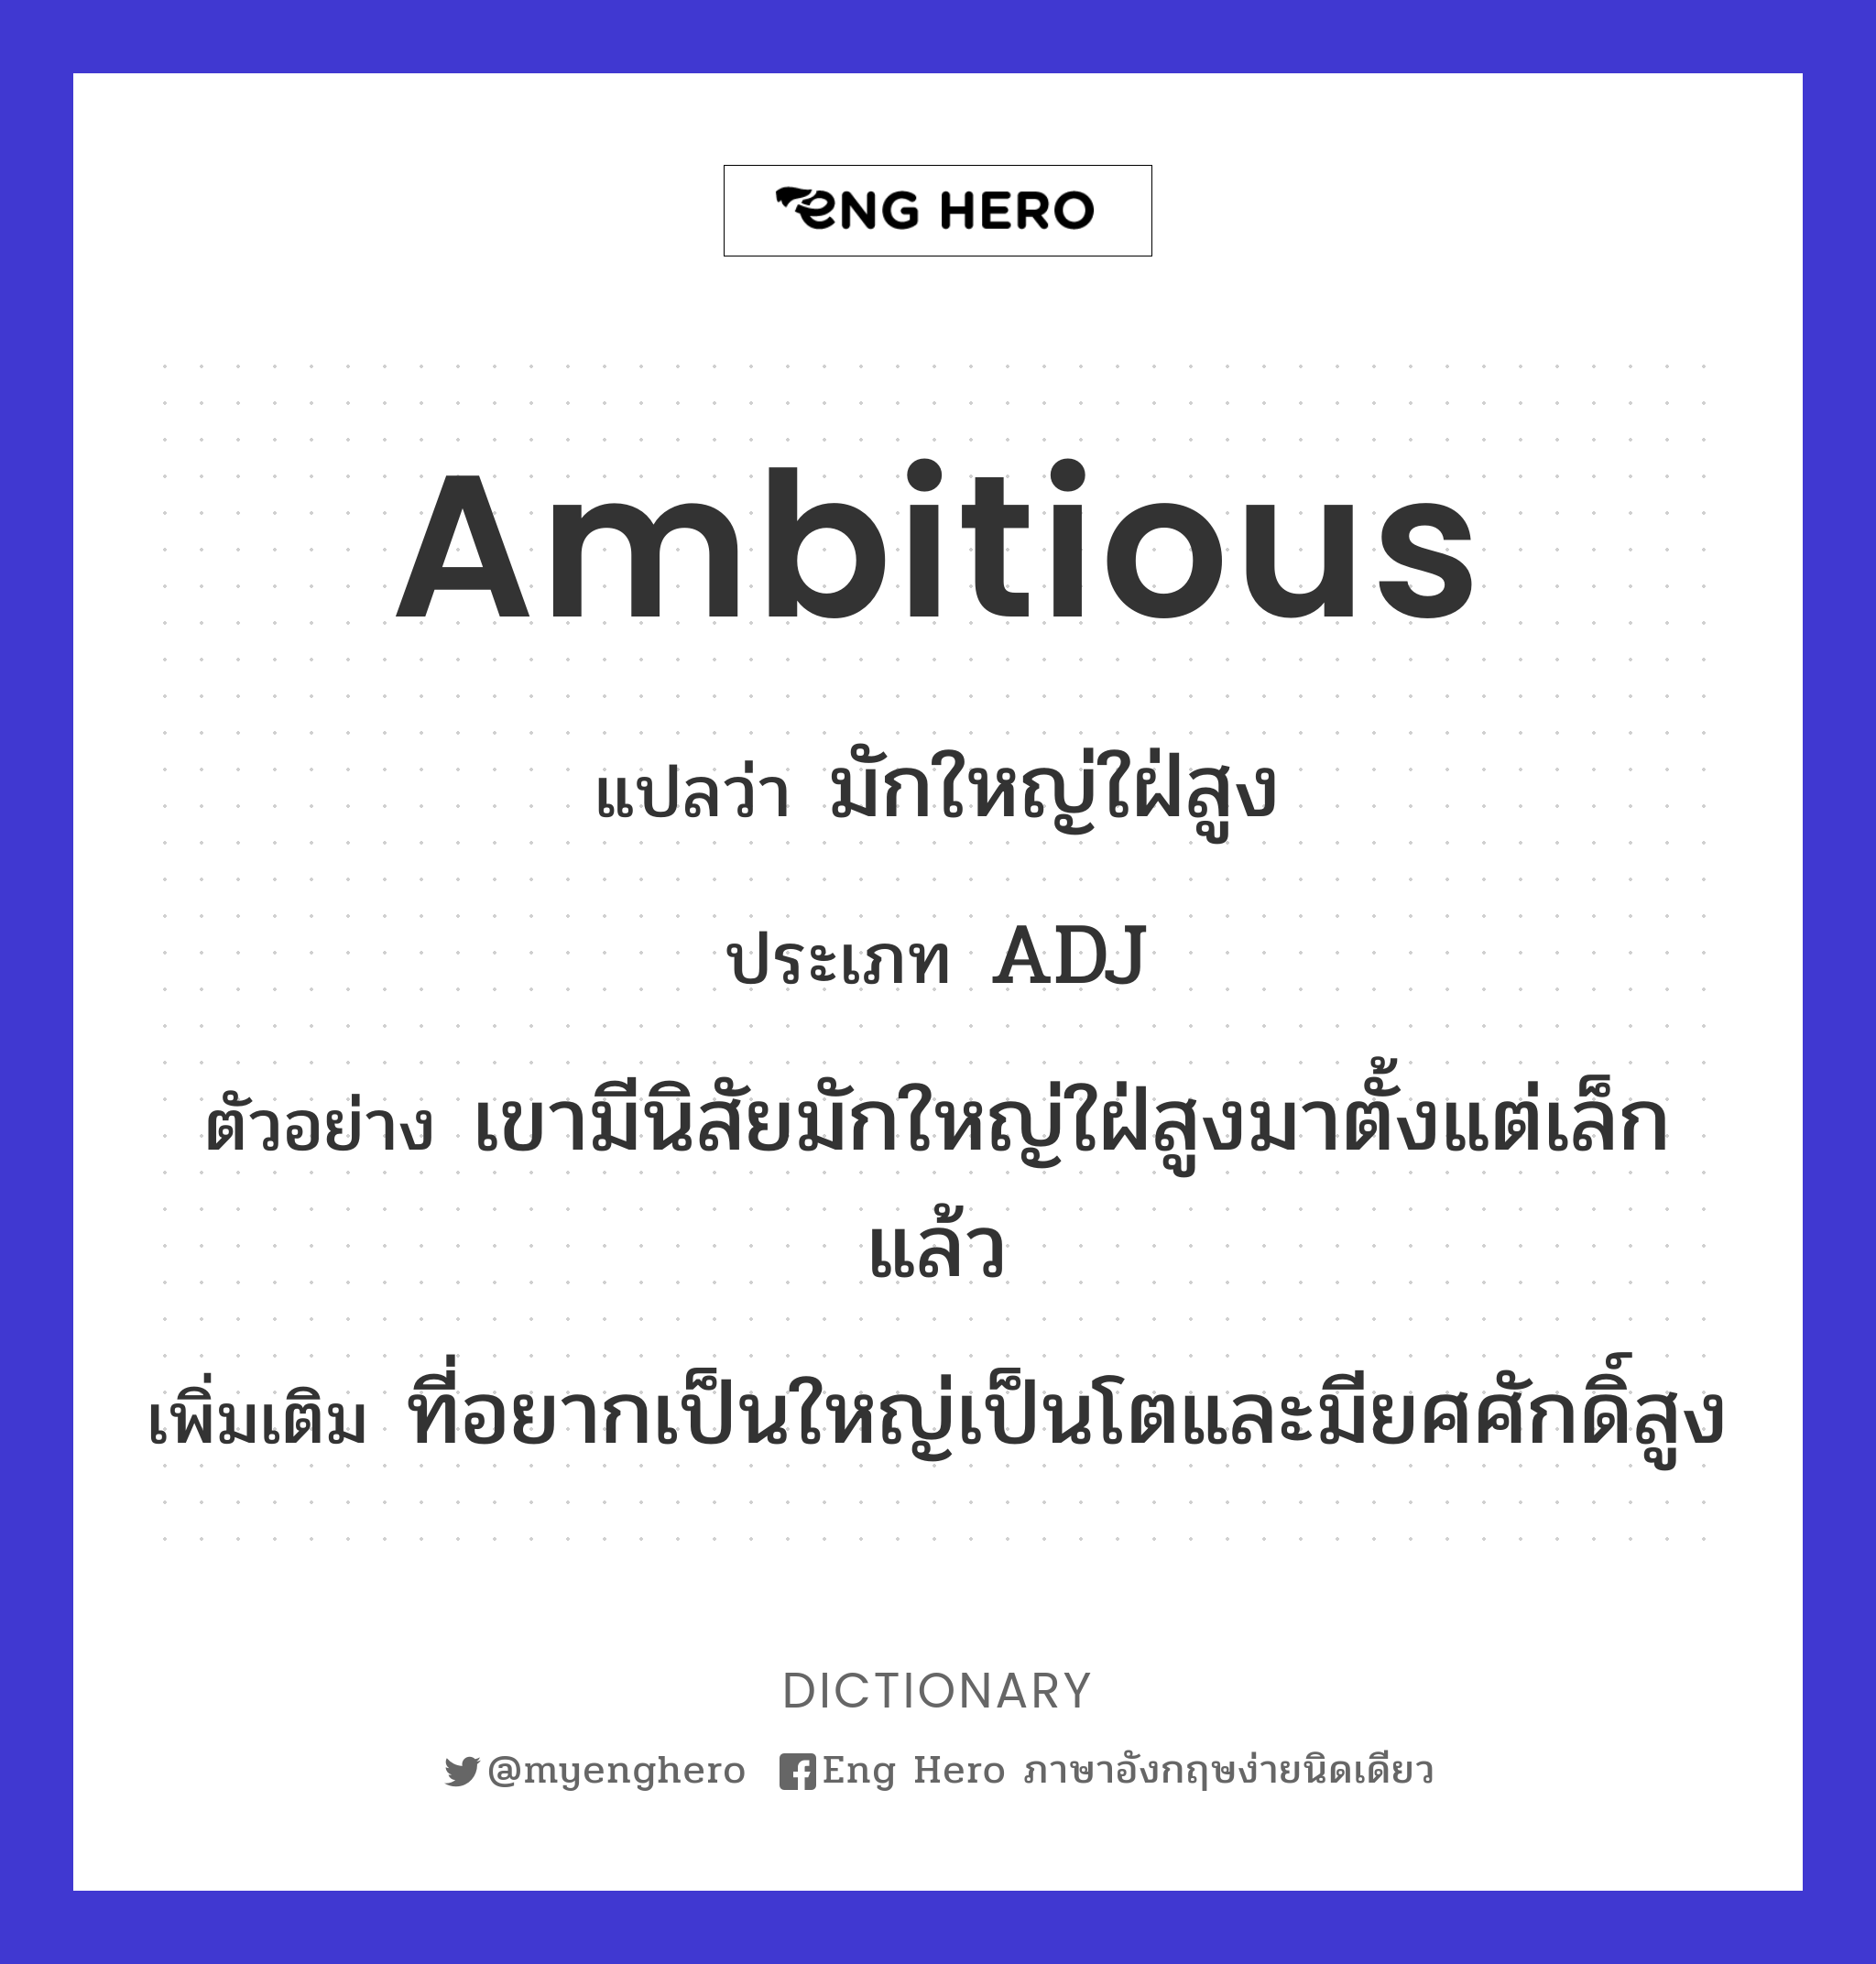 ambitious